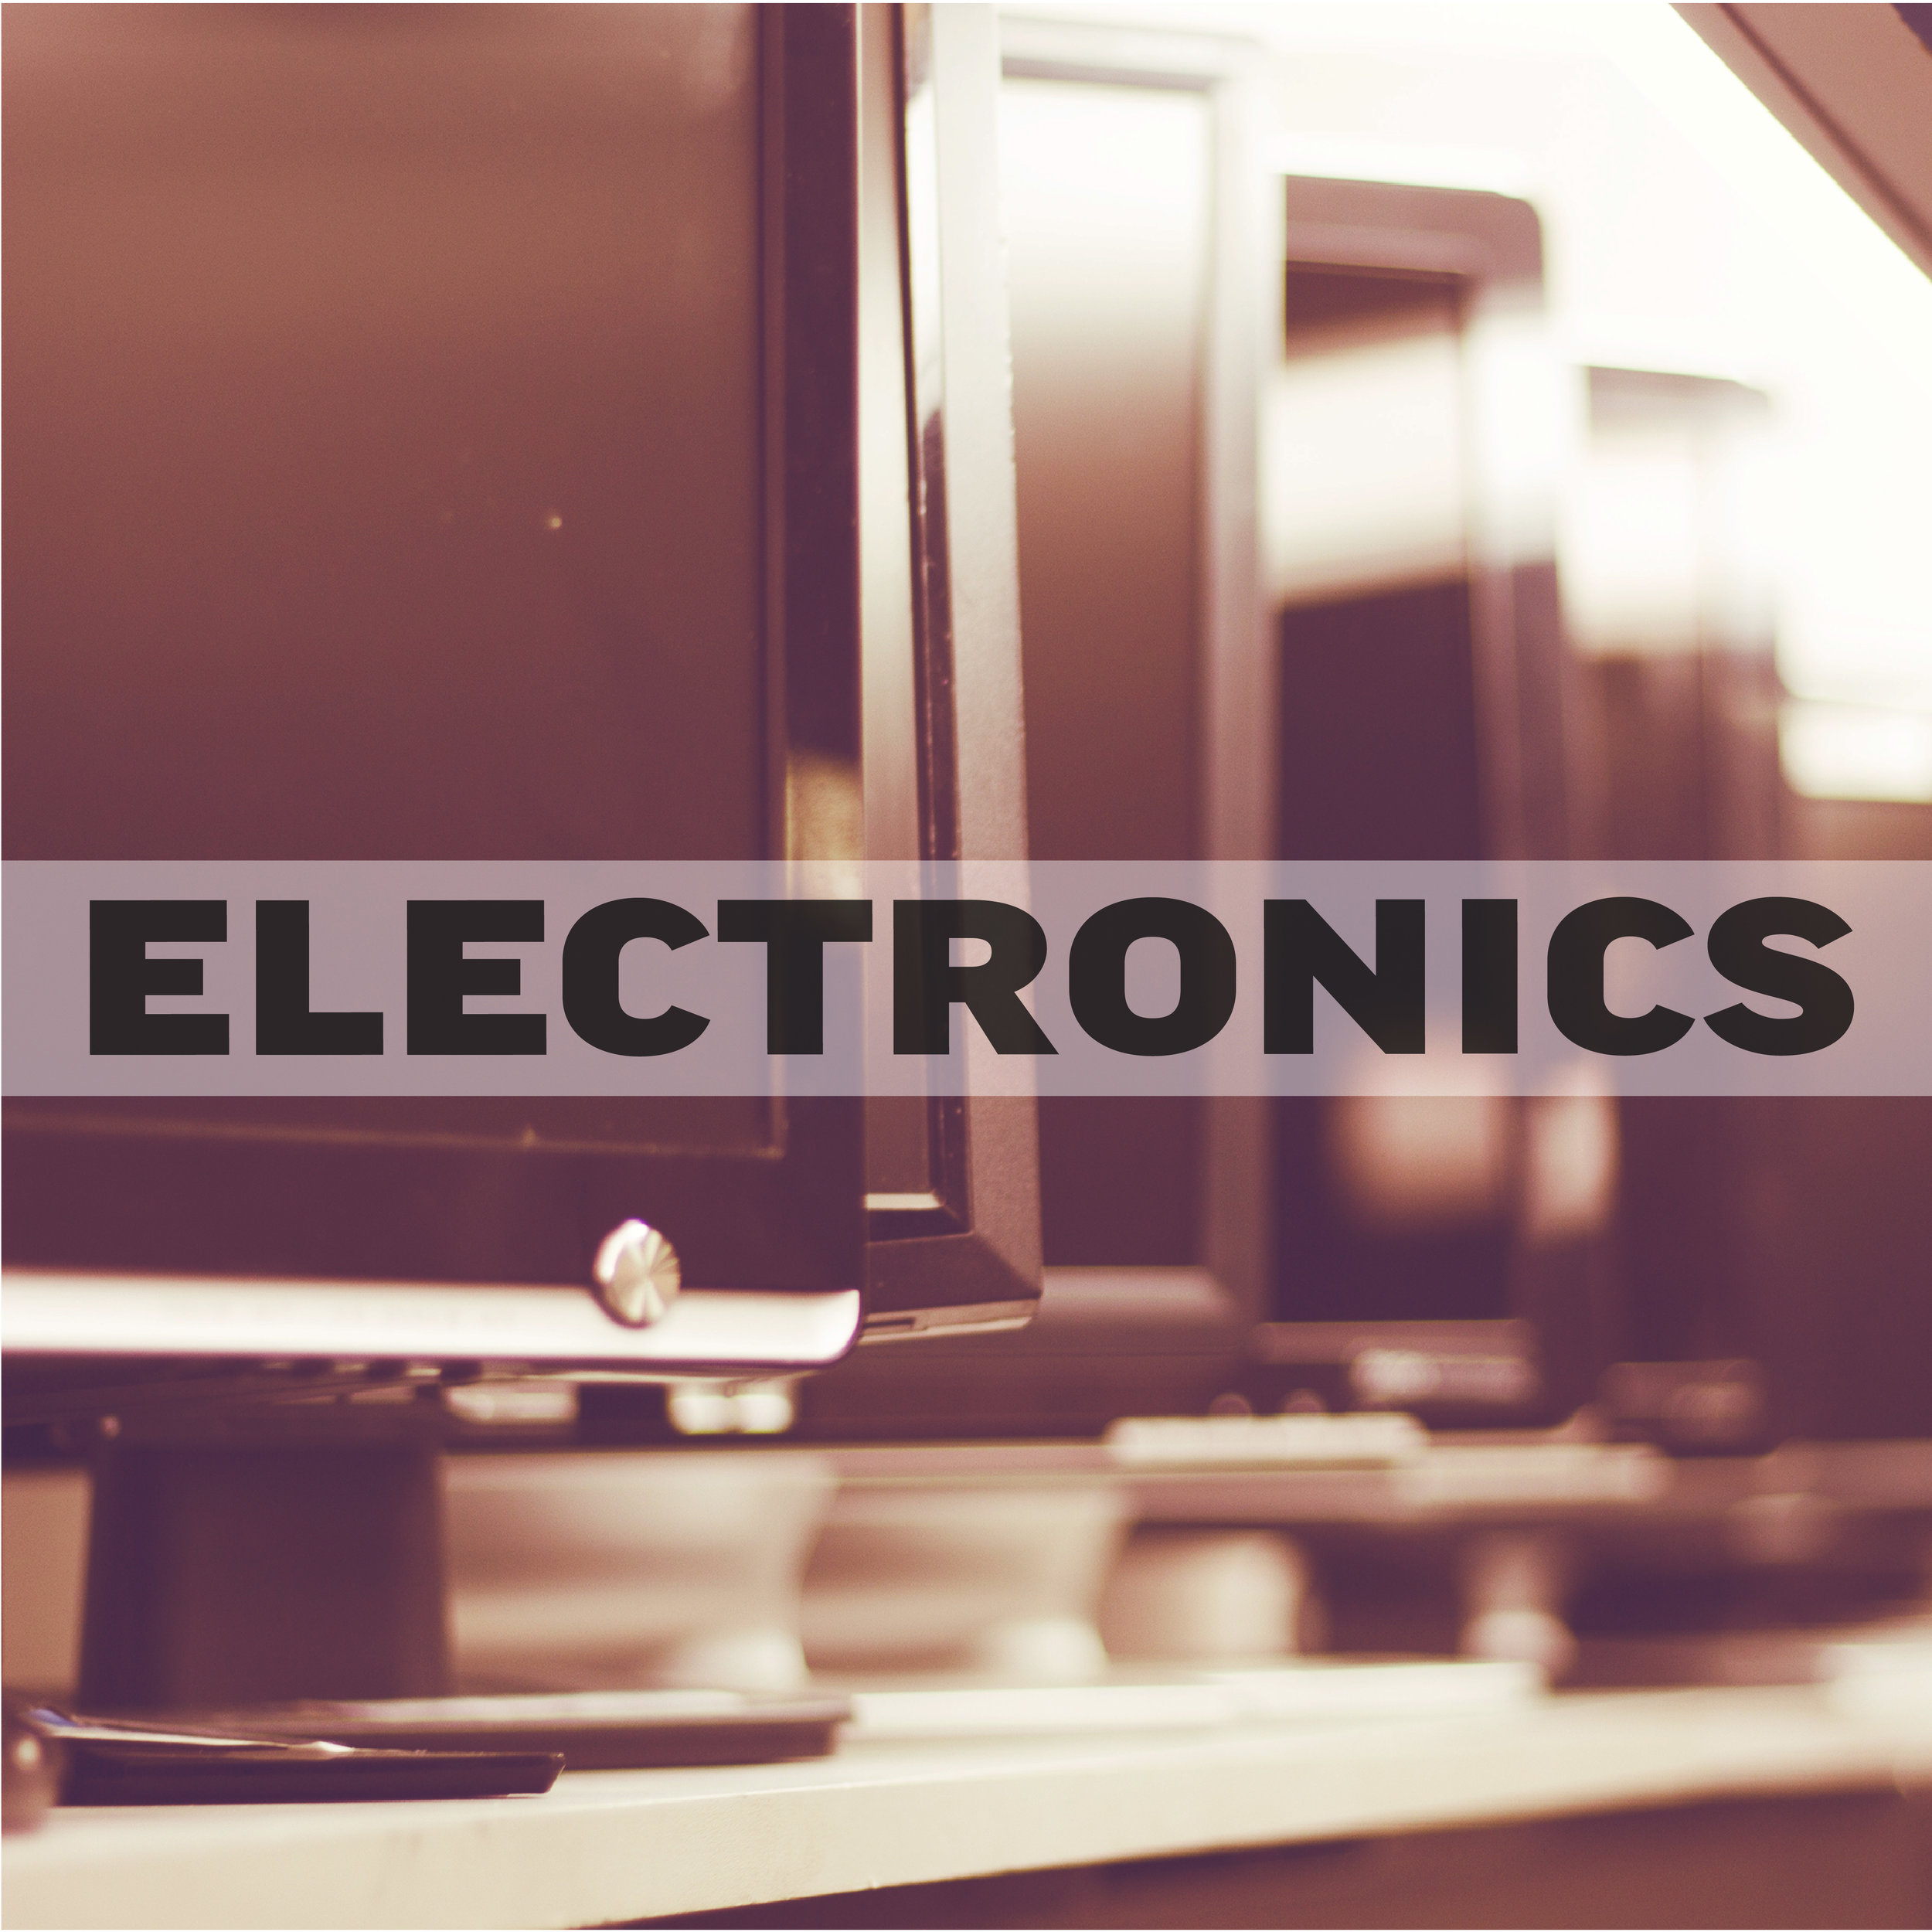 Electronics-01-01.jpg